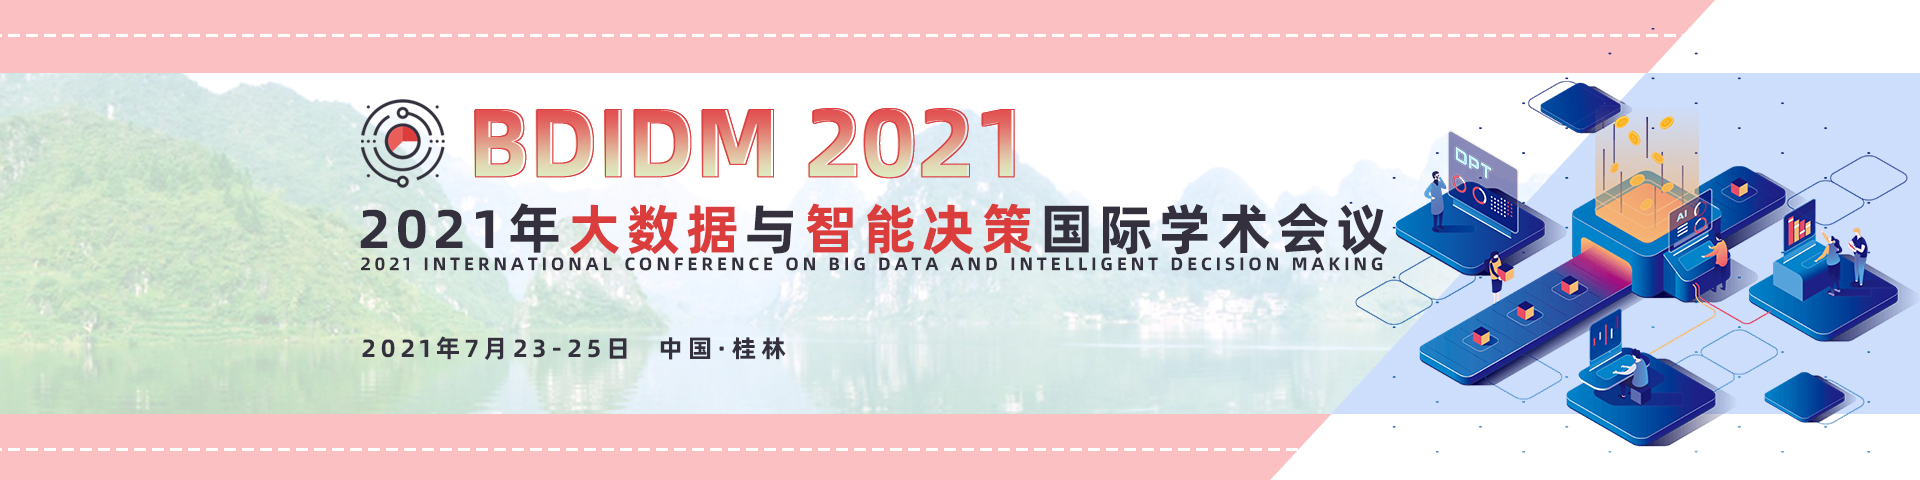 7月桂林BDIDM2021-banner中-何霞丽-20210326.jpg